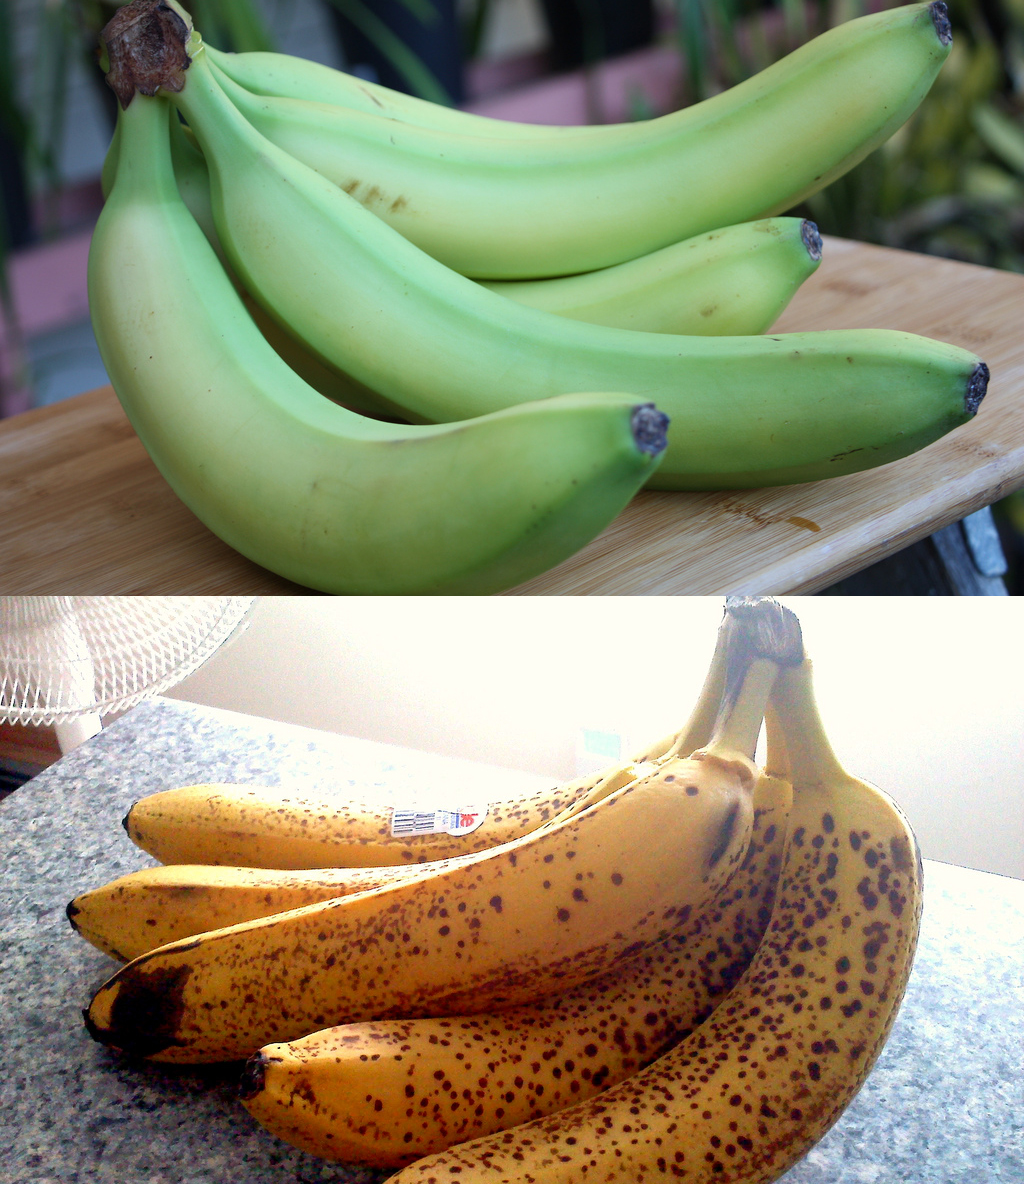 Ripe and unripe bananas